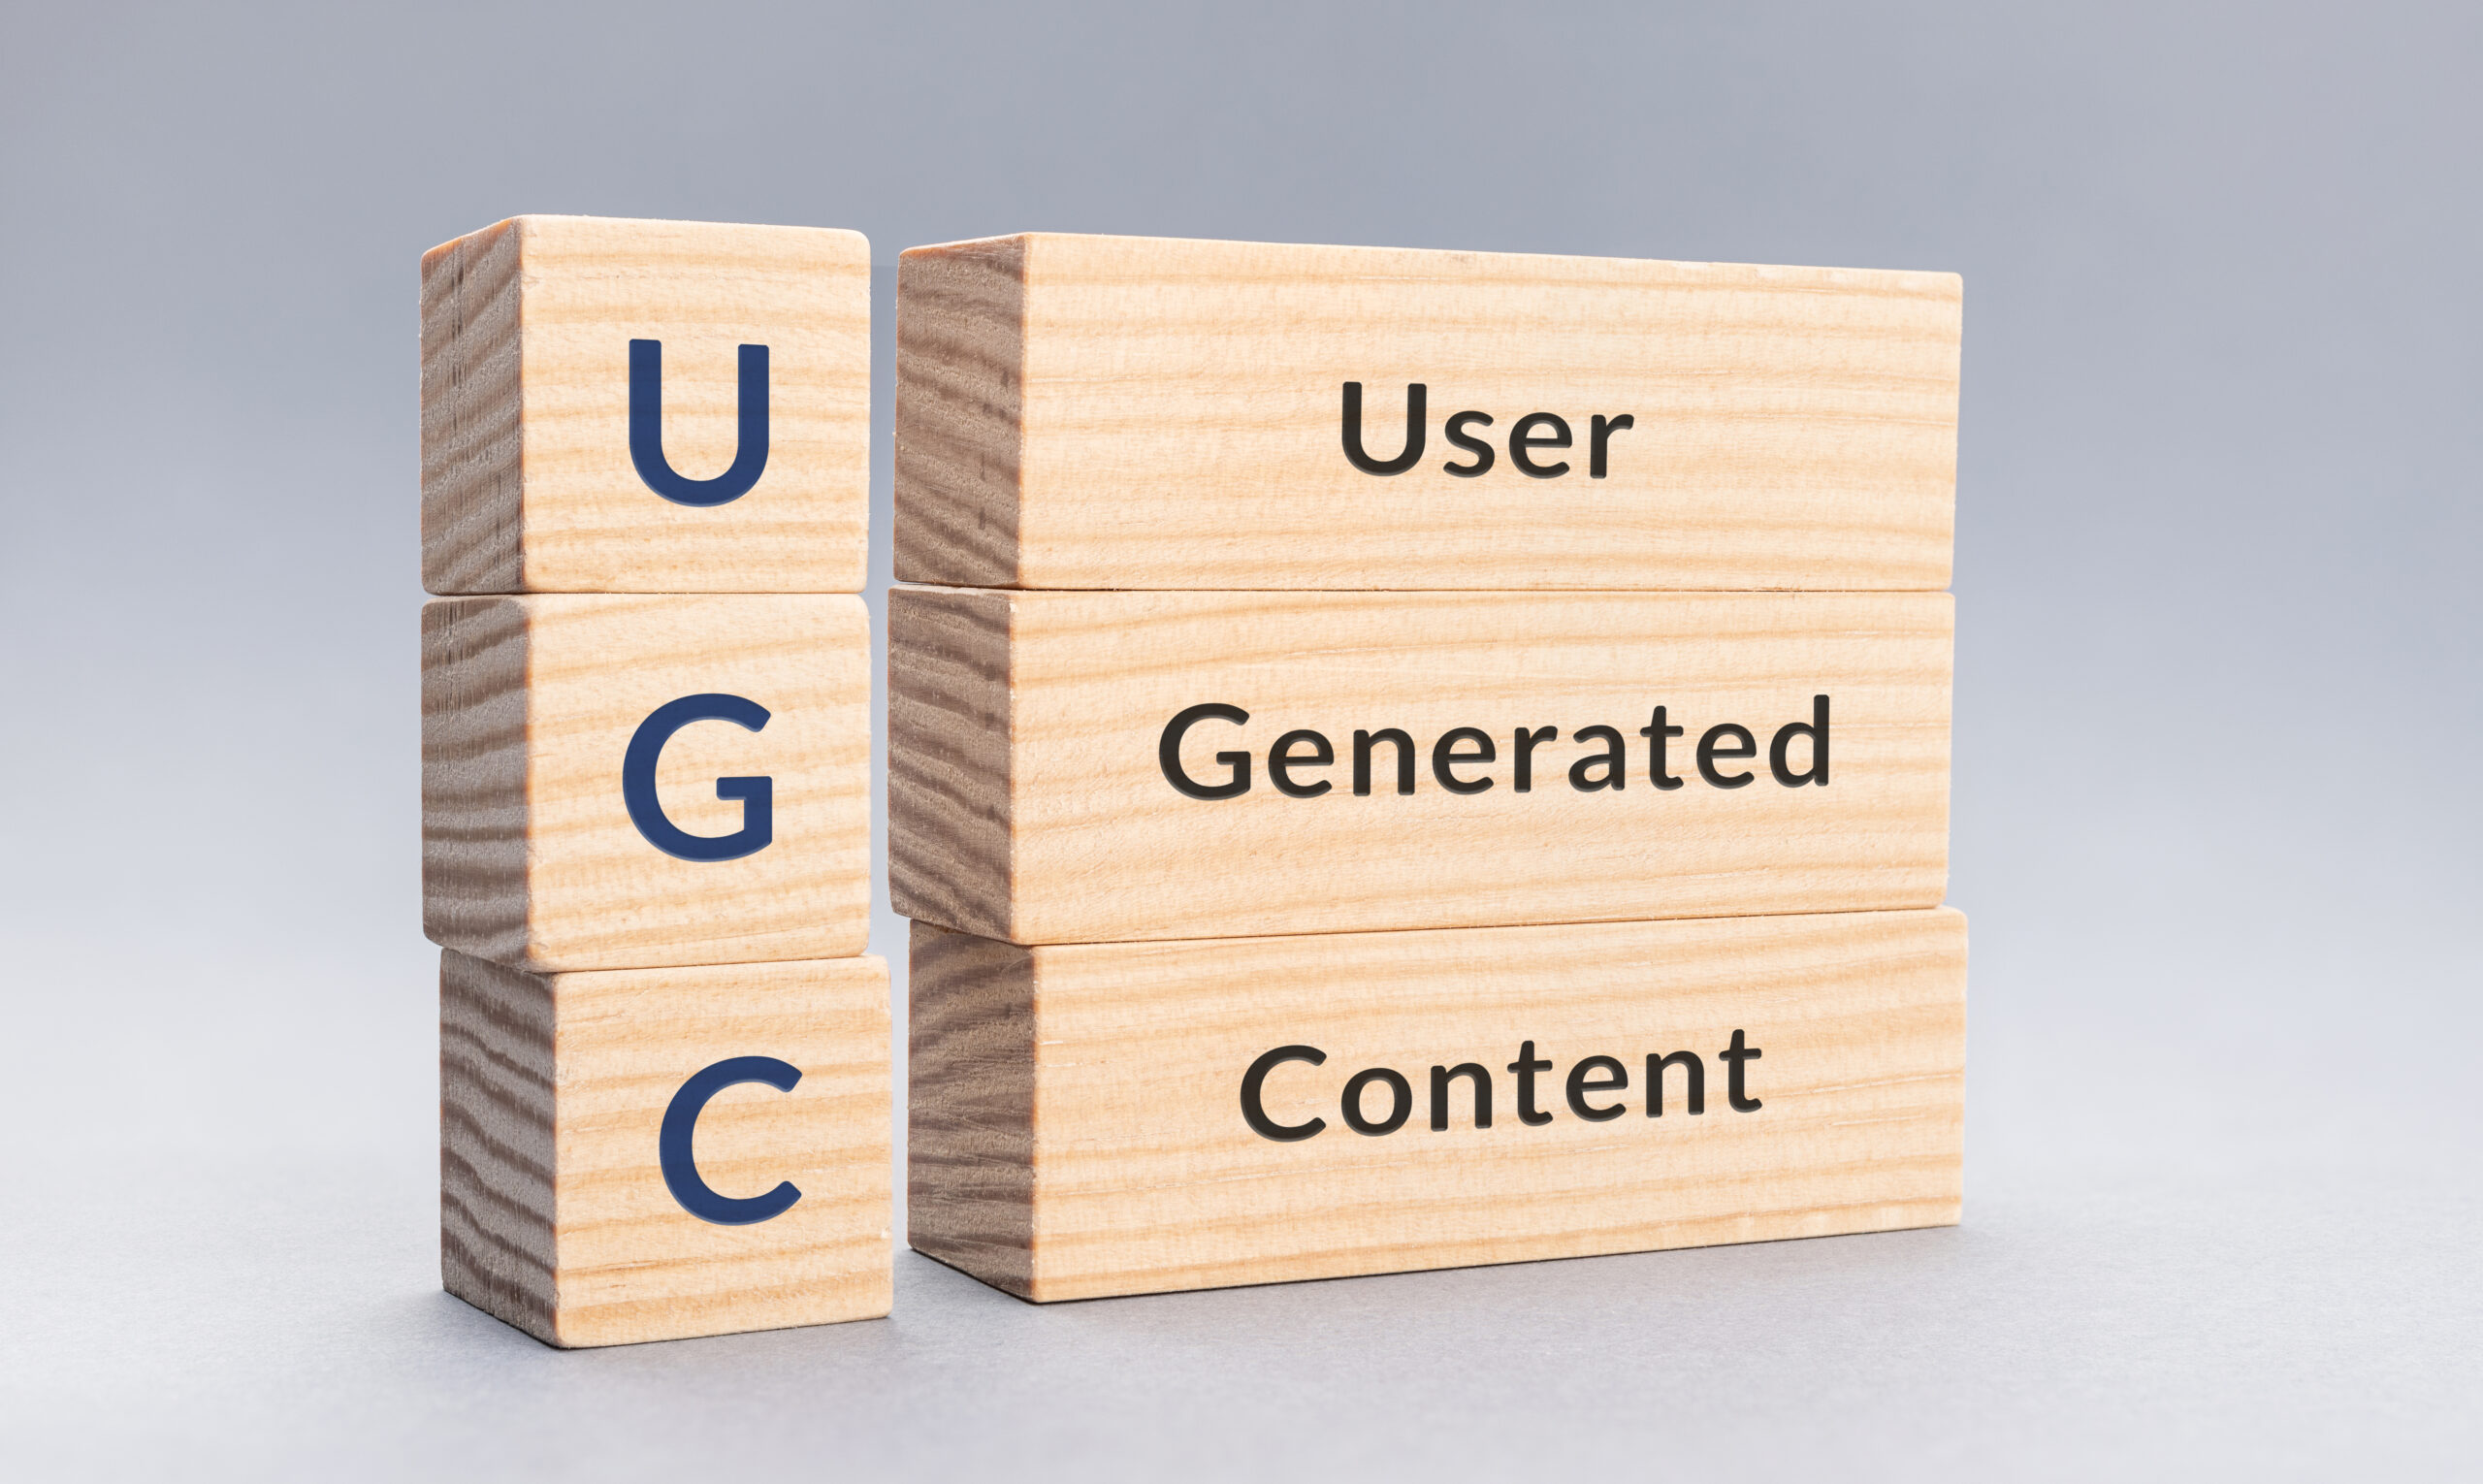 UGC - User Generated Content